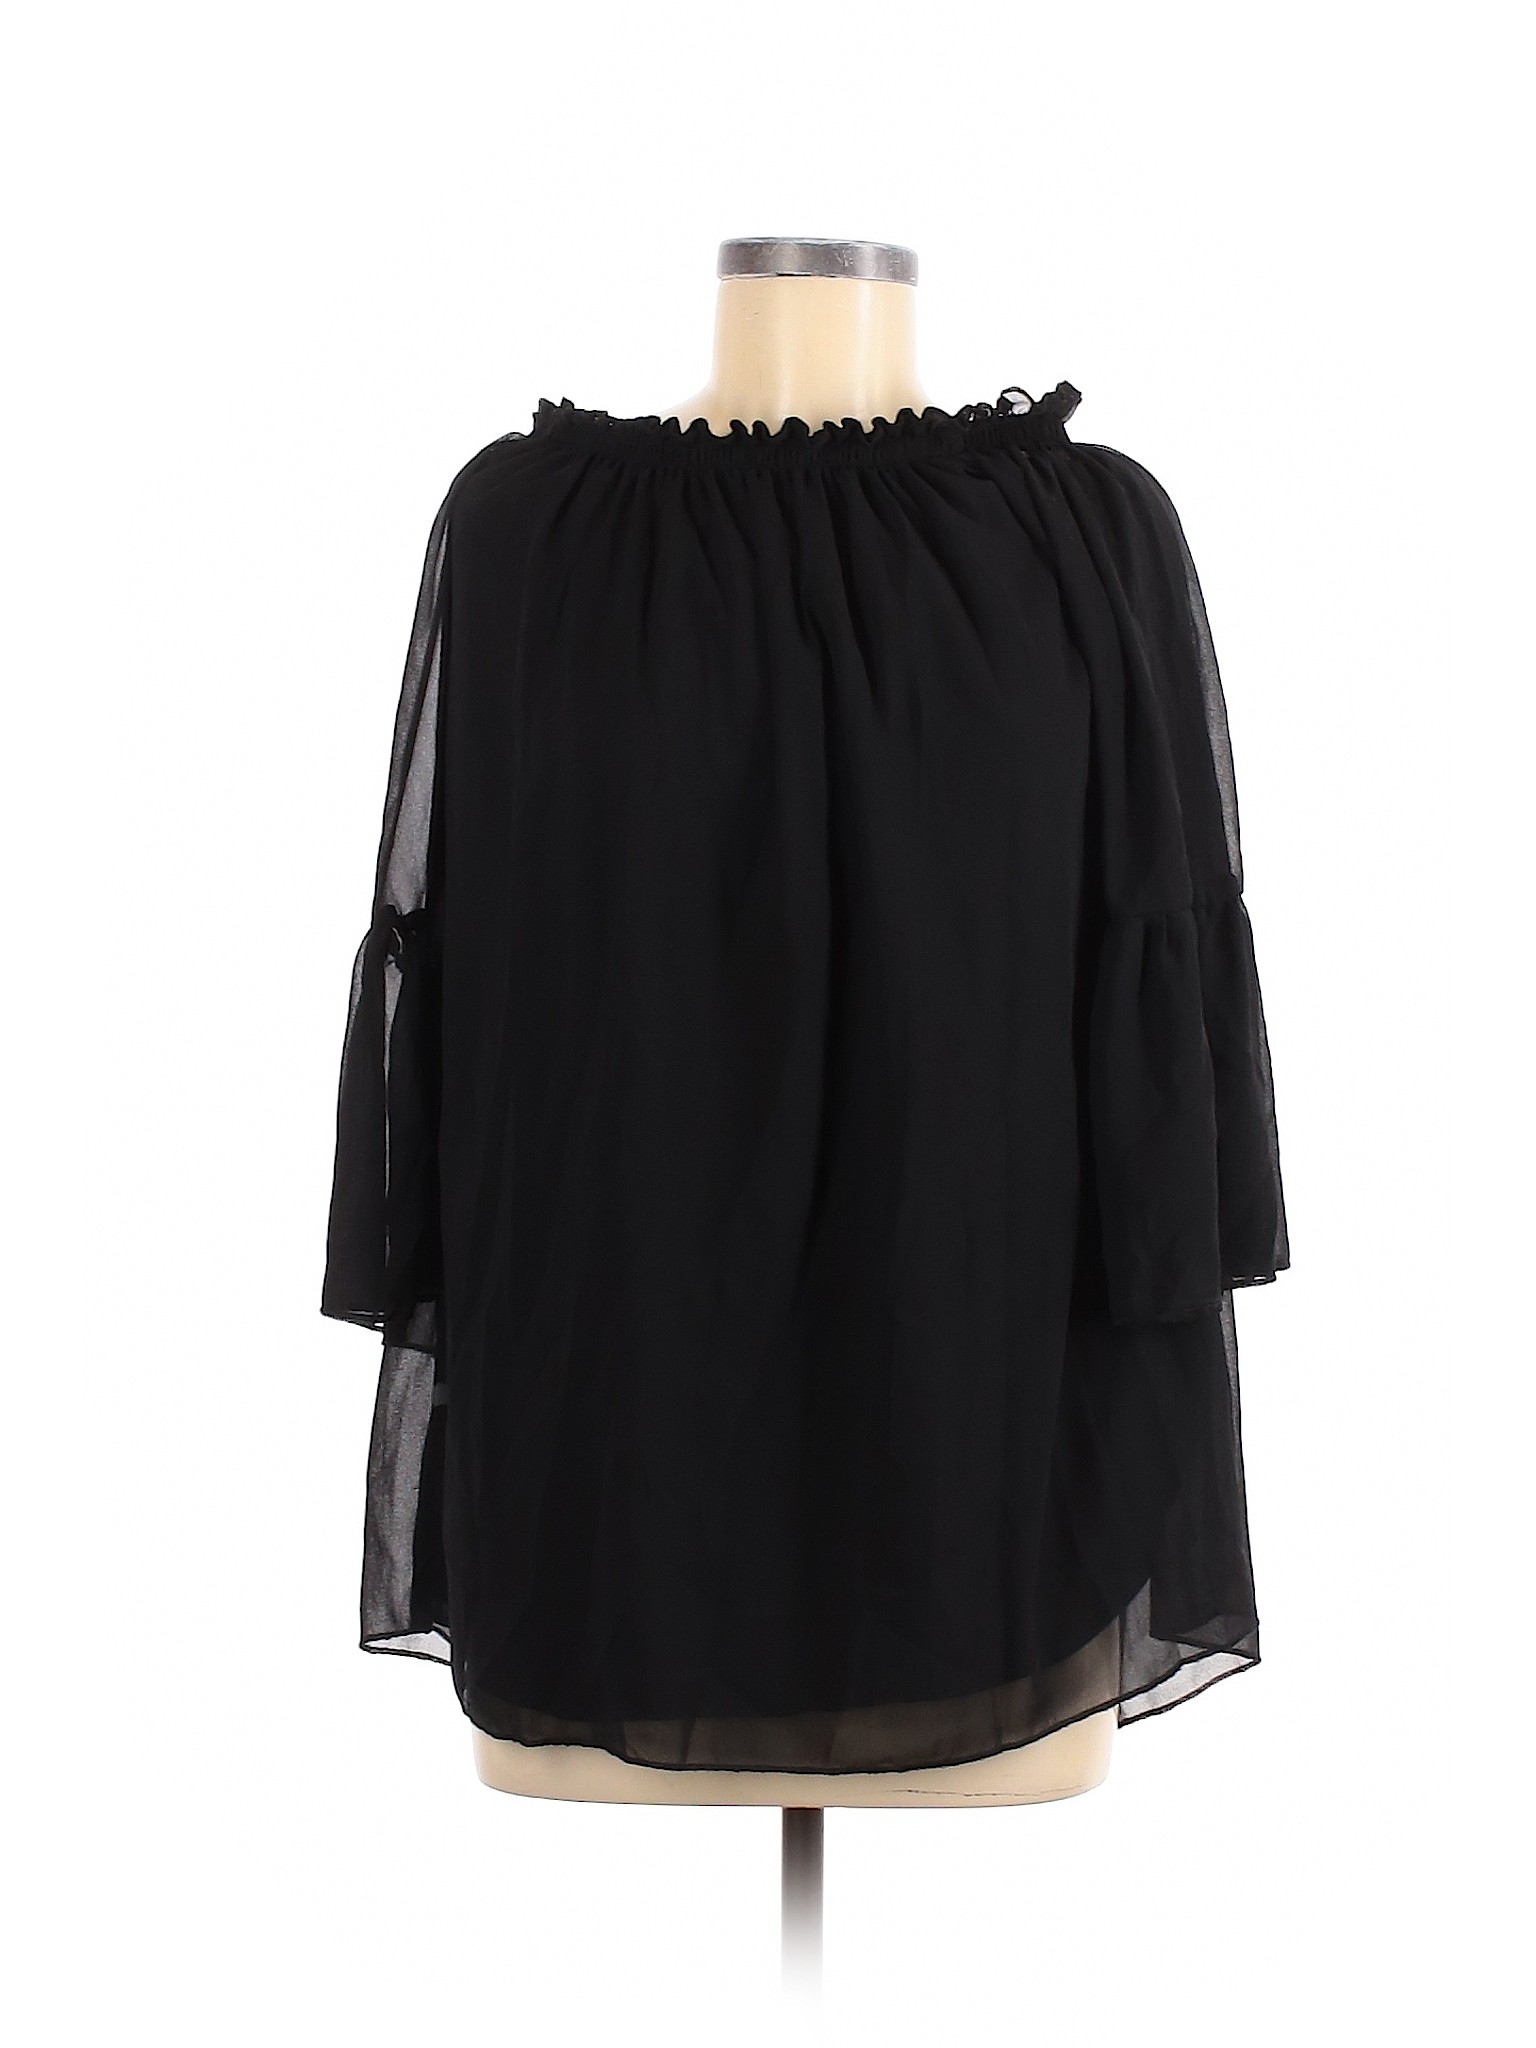 NWT Zanzea Collection Women Black 3/4 Sleeve Blouse M | eBay